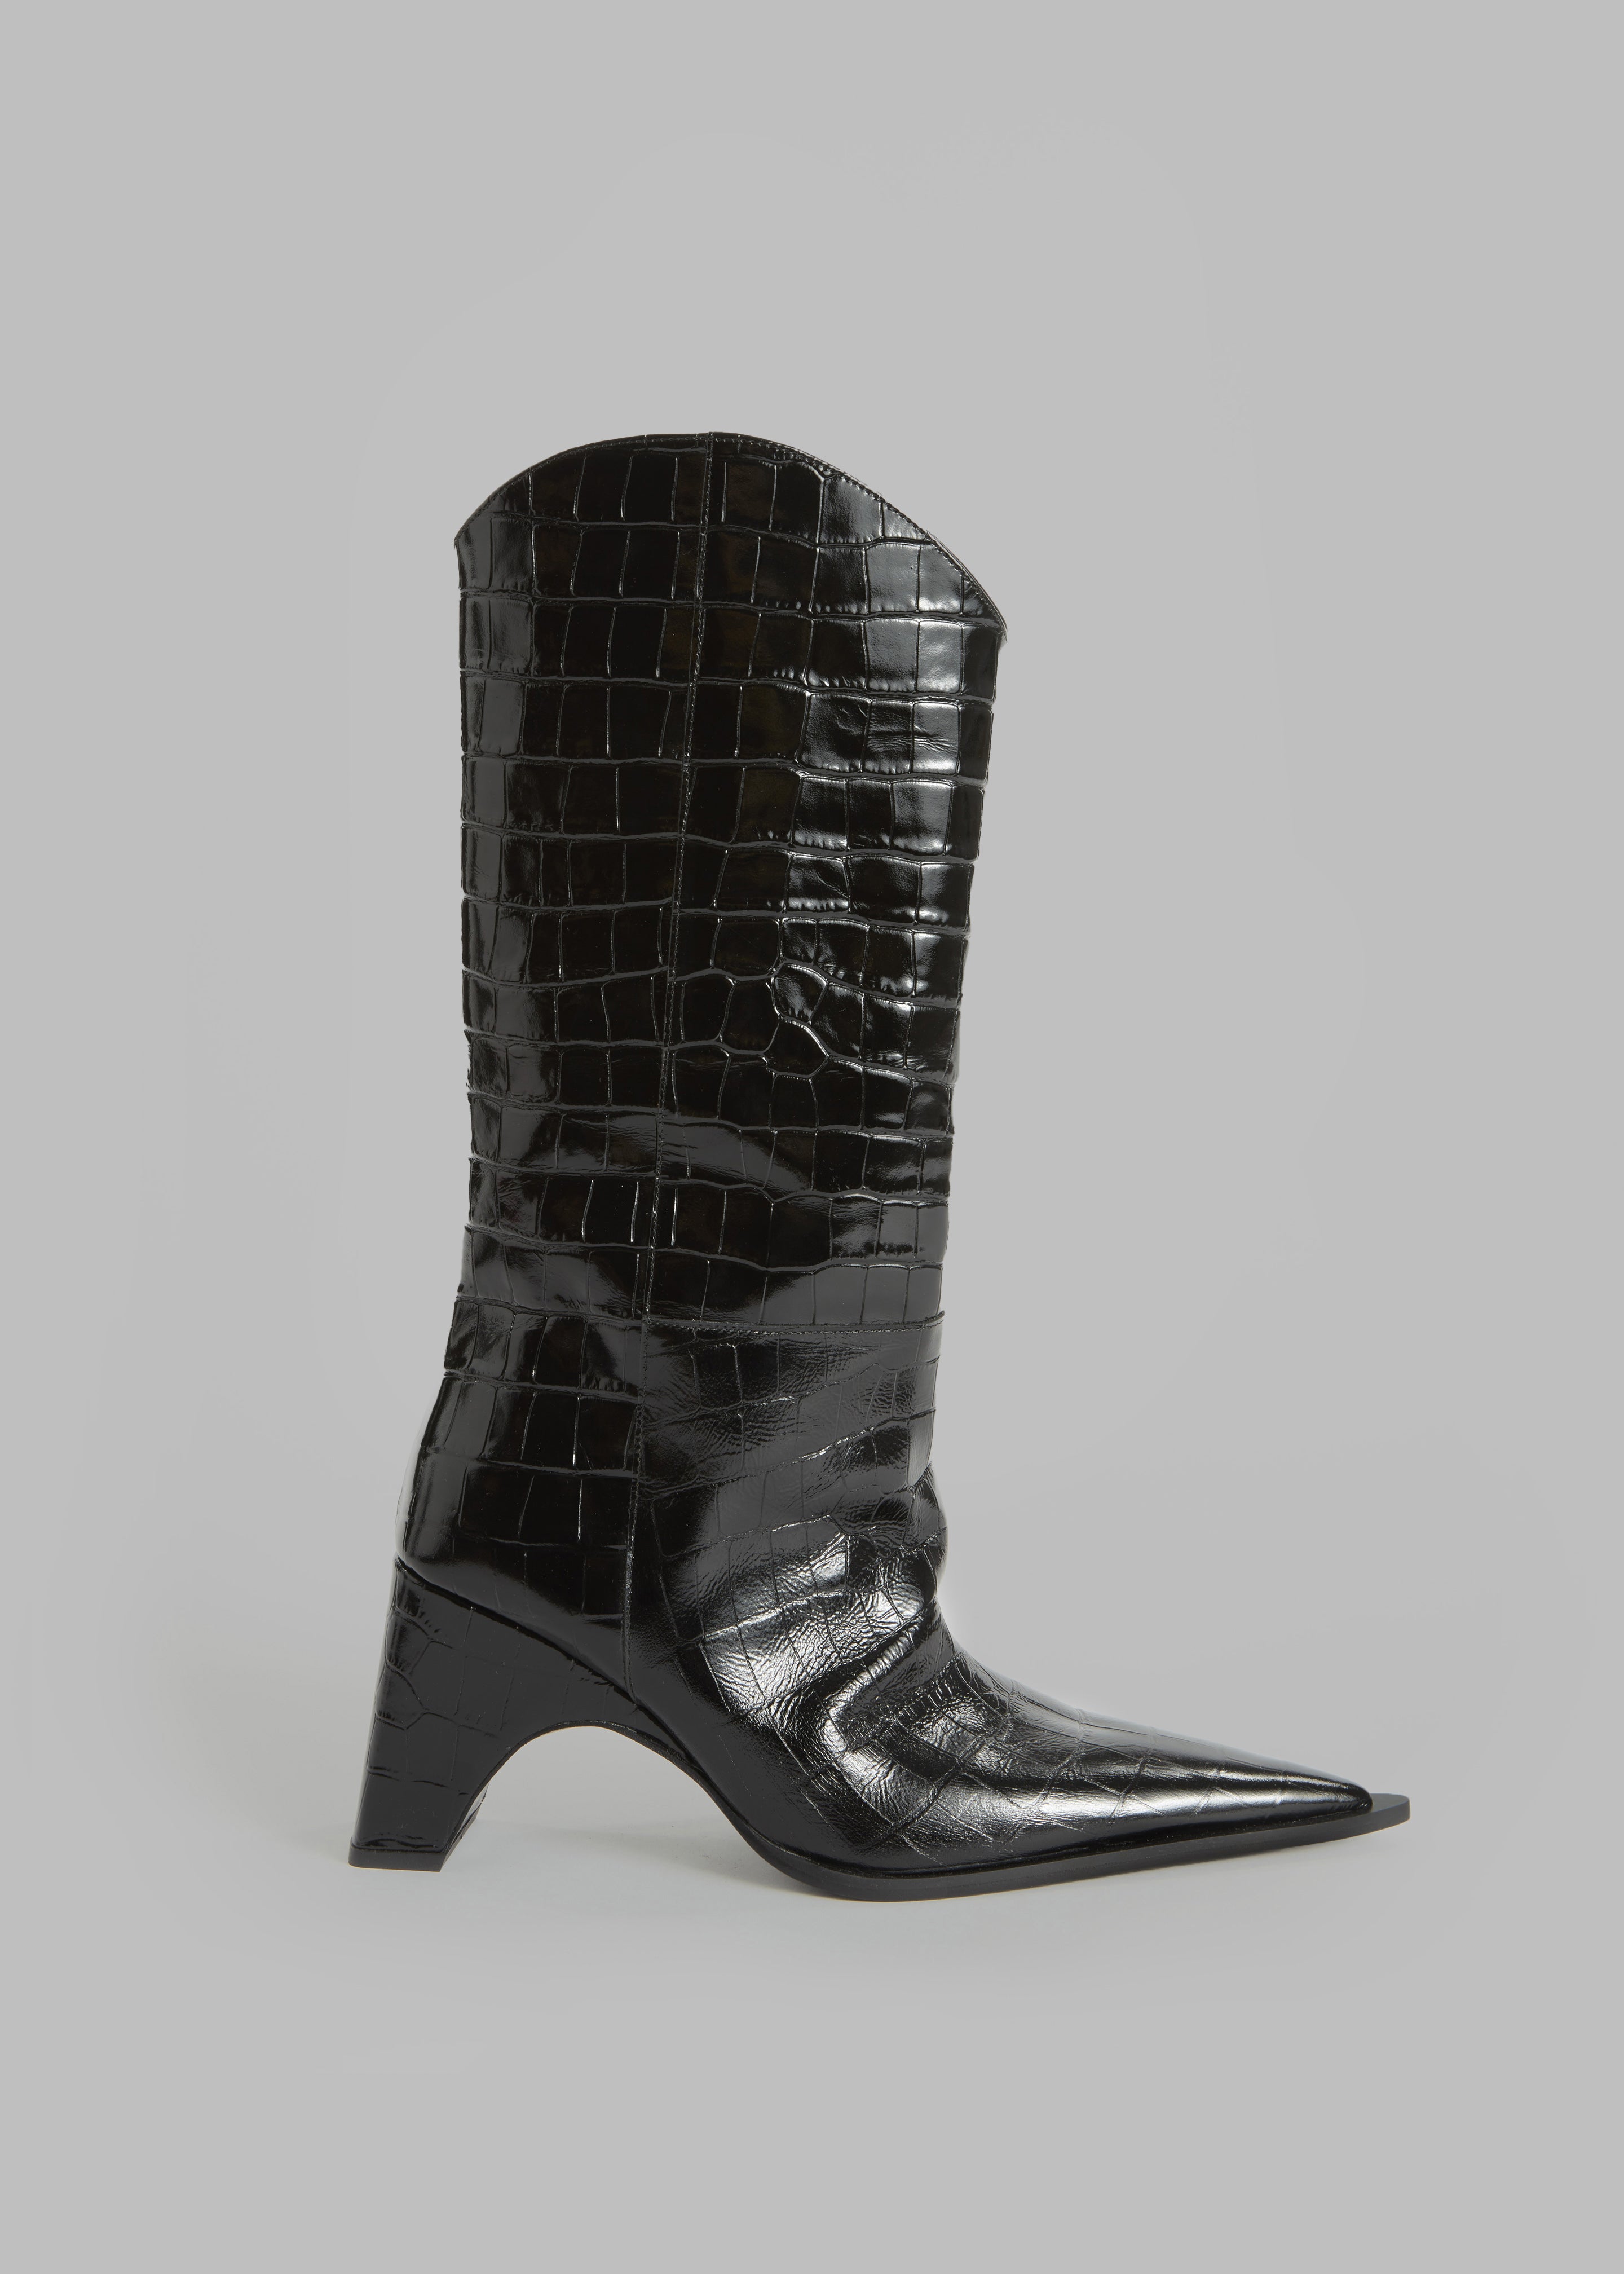 Women's Boots – The Frankie Shop